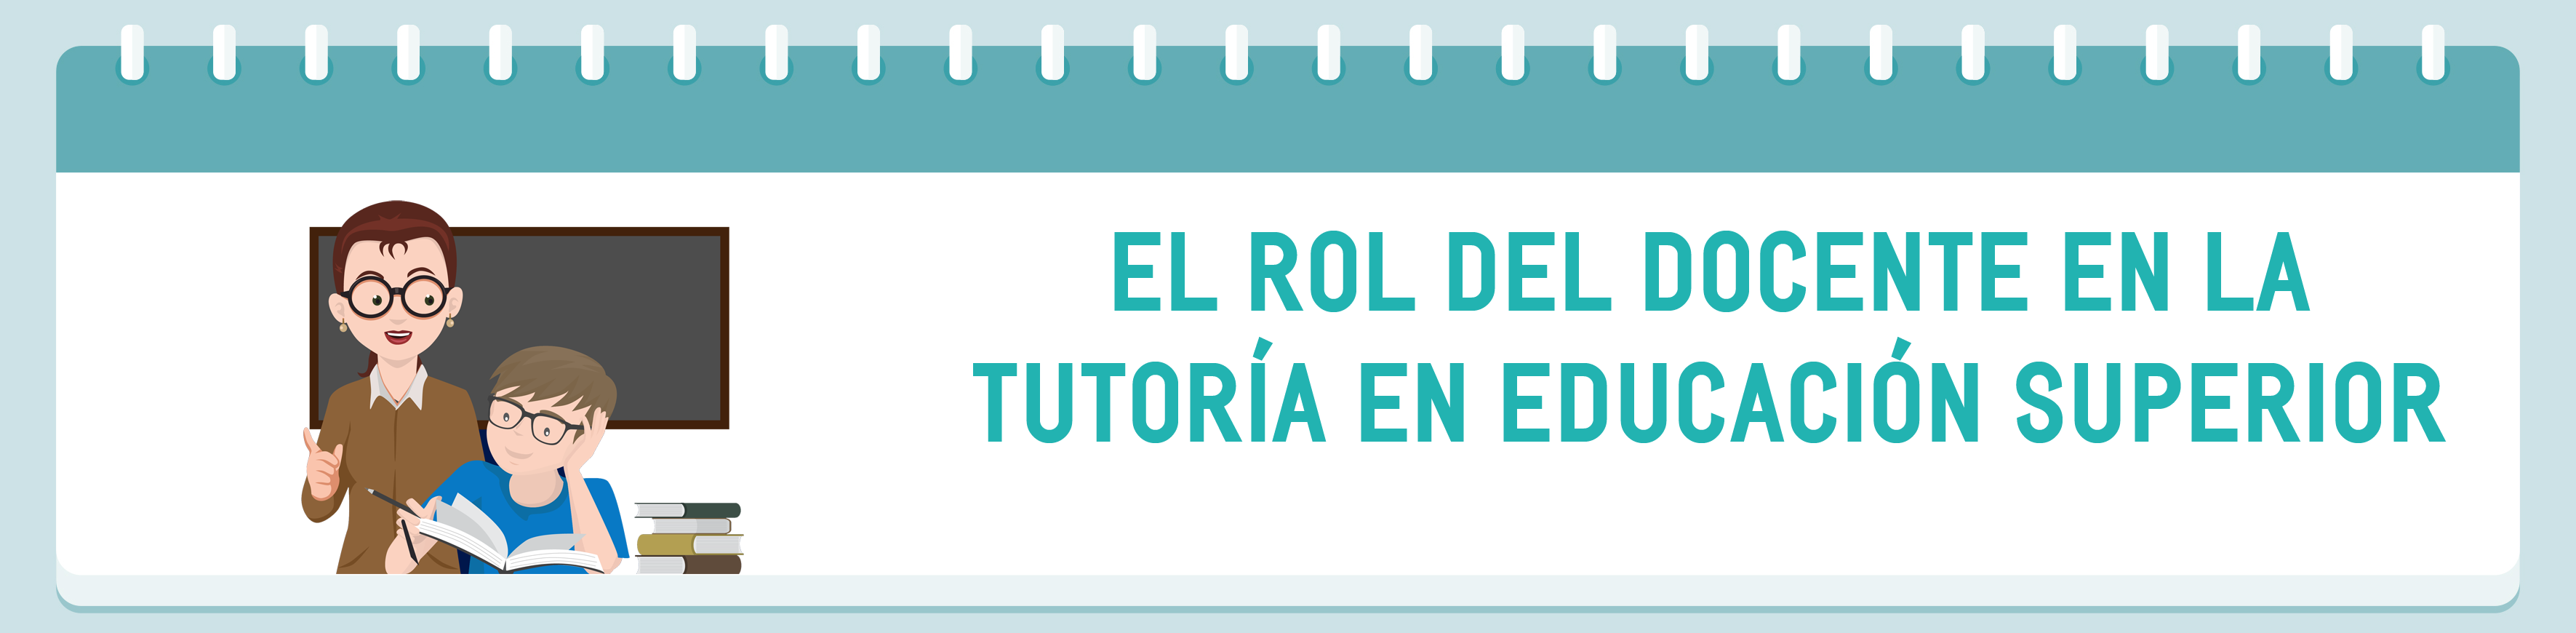 rol_tutor_docente_tutorias_educacion_superior.png